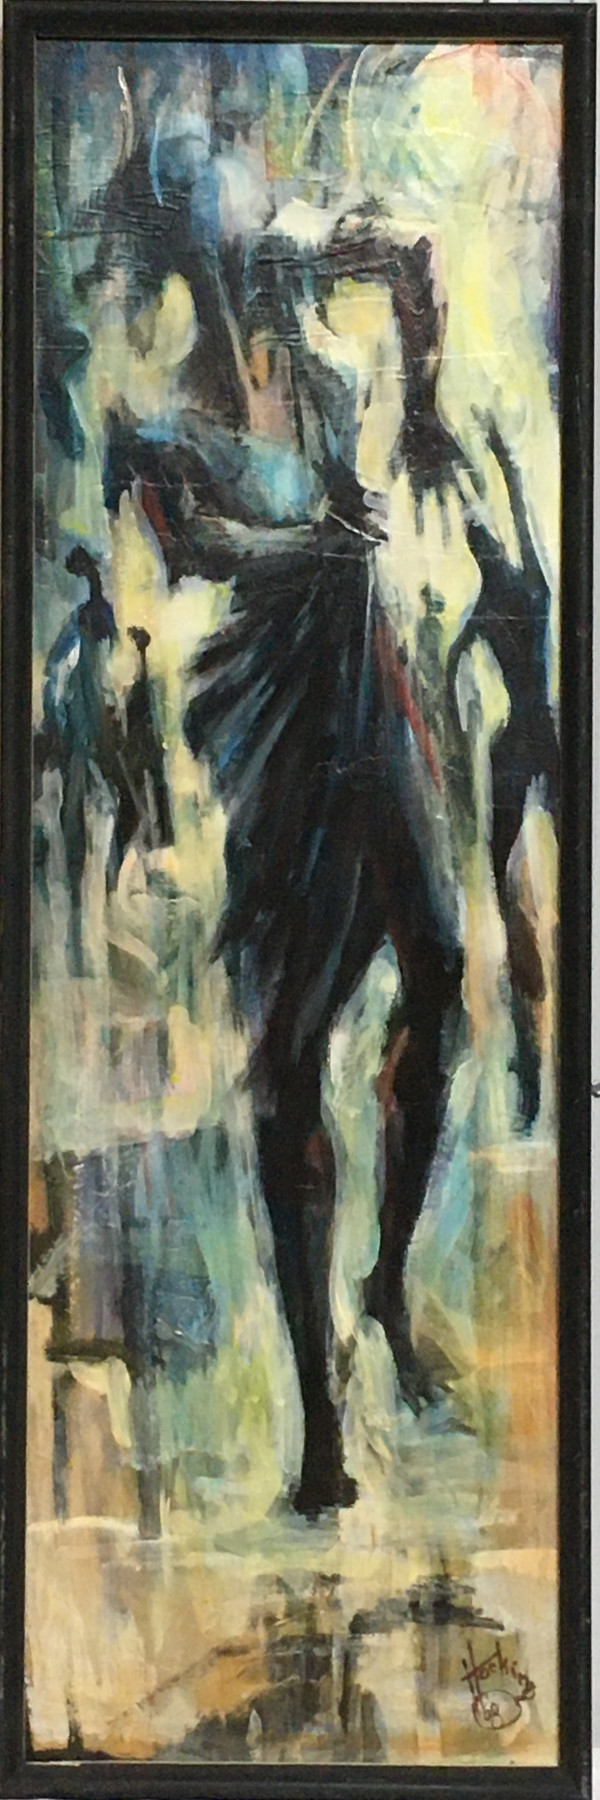 Fleeing Figure by Roy Hocking